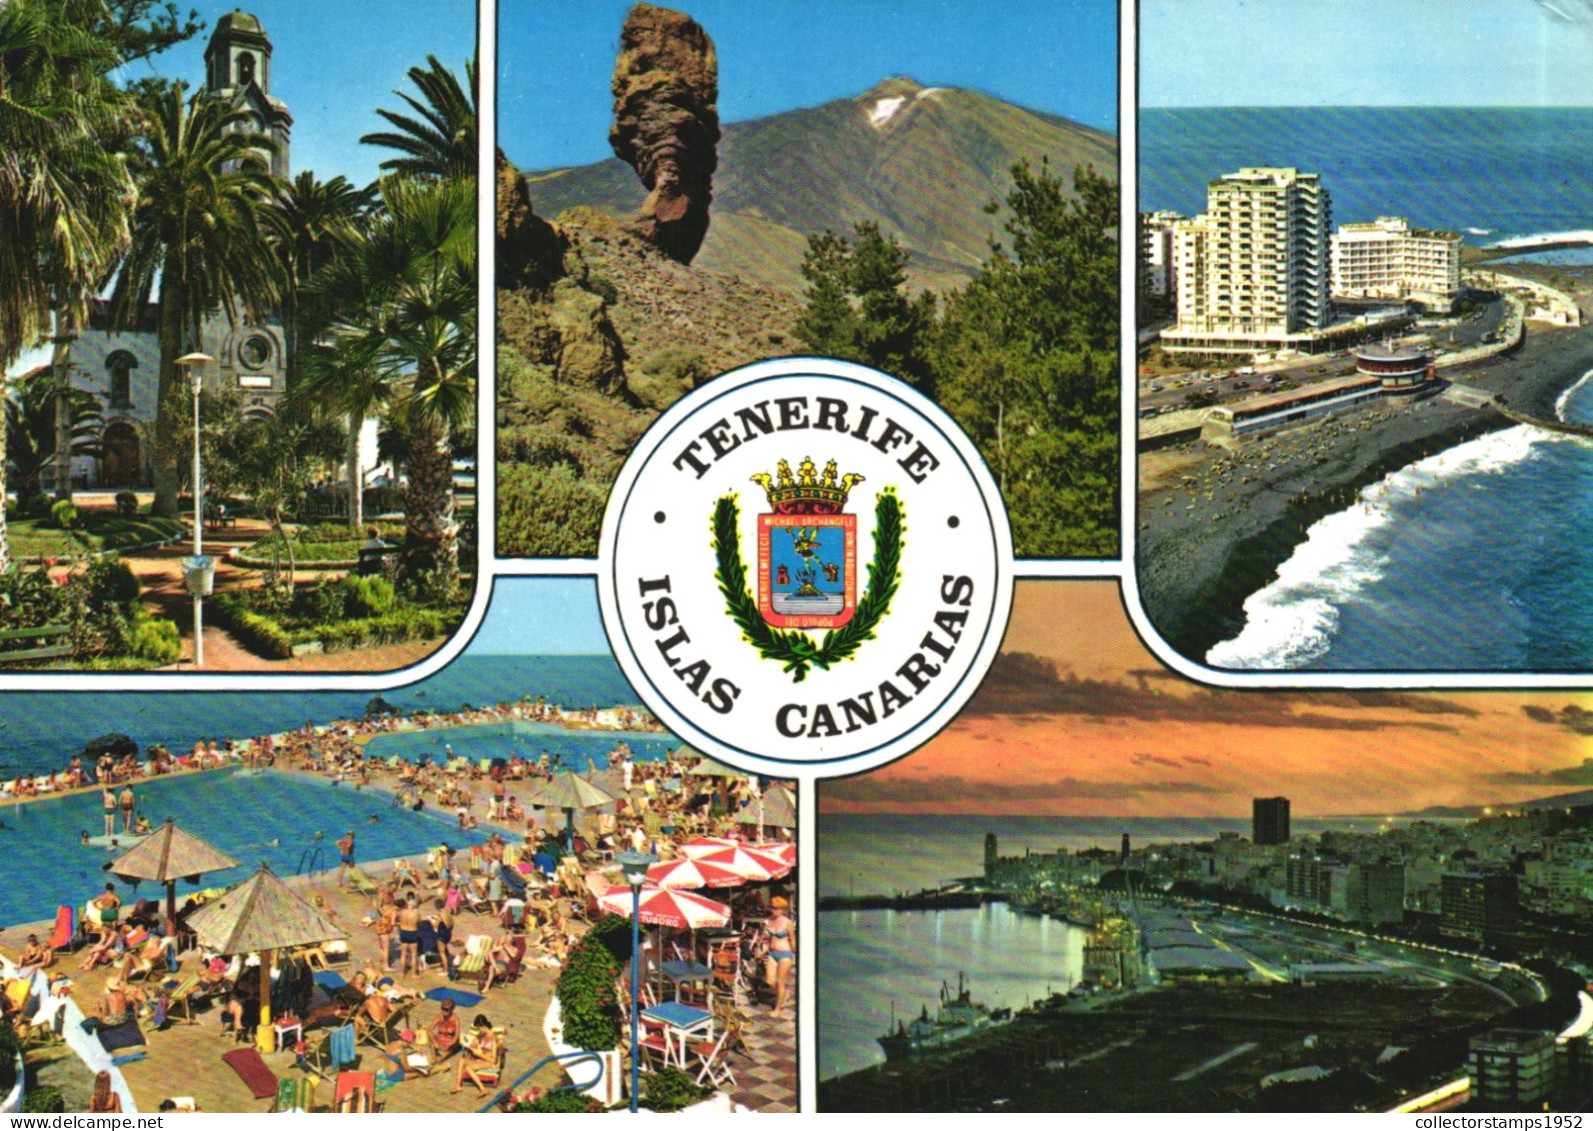 TENERIFE, CANARY ISLANDS, MULTIPLE VIEWS, ARCHITECTURE, PARK, BEACH, UMBRELLA, RESORT, EMBLEM, MOUNTAIN, SPAIN, POSTCARD - Tenerife